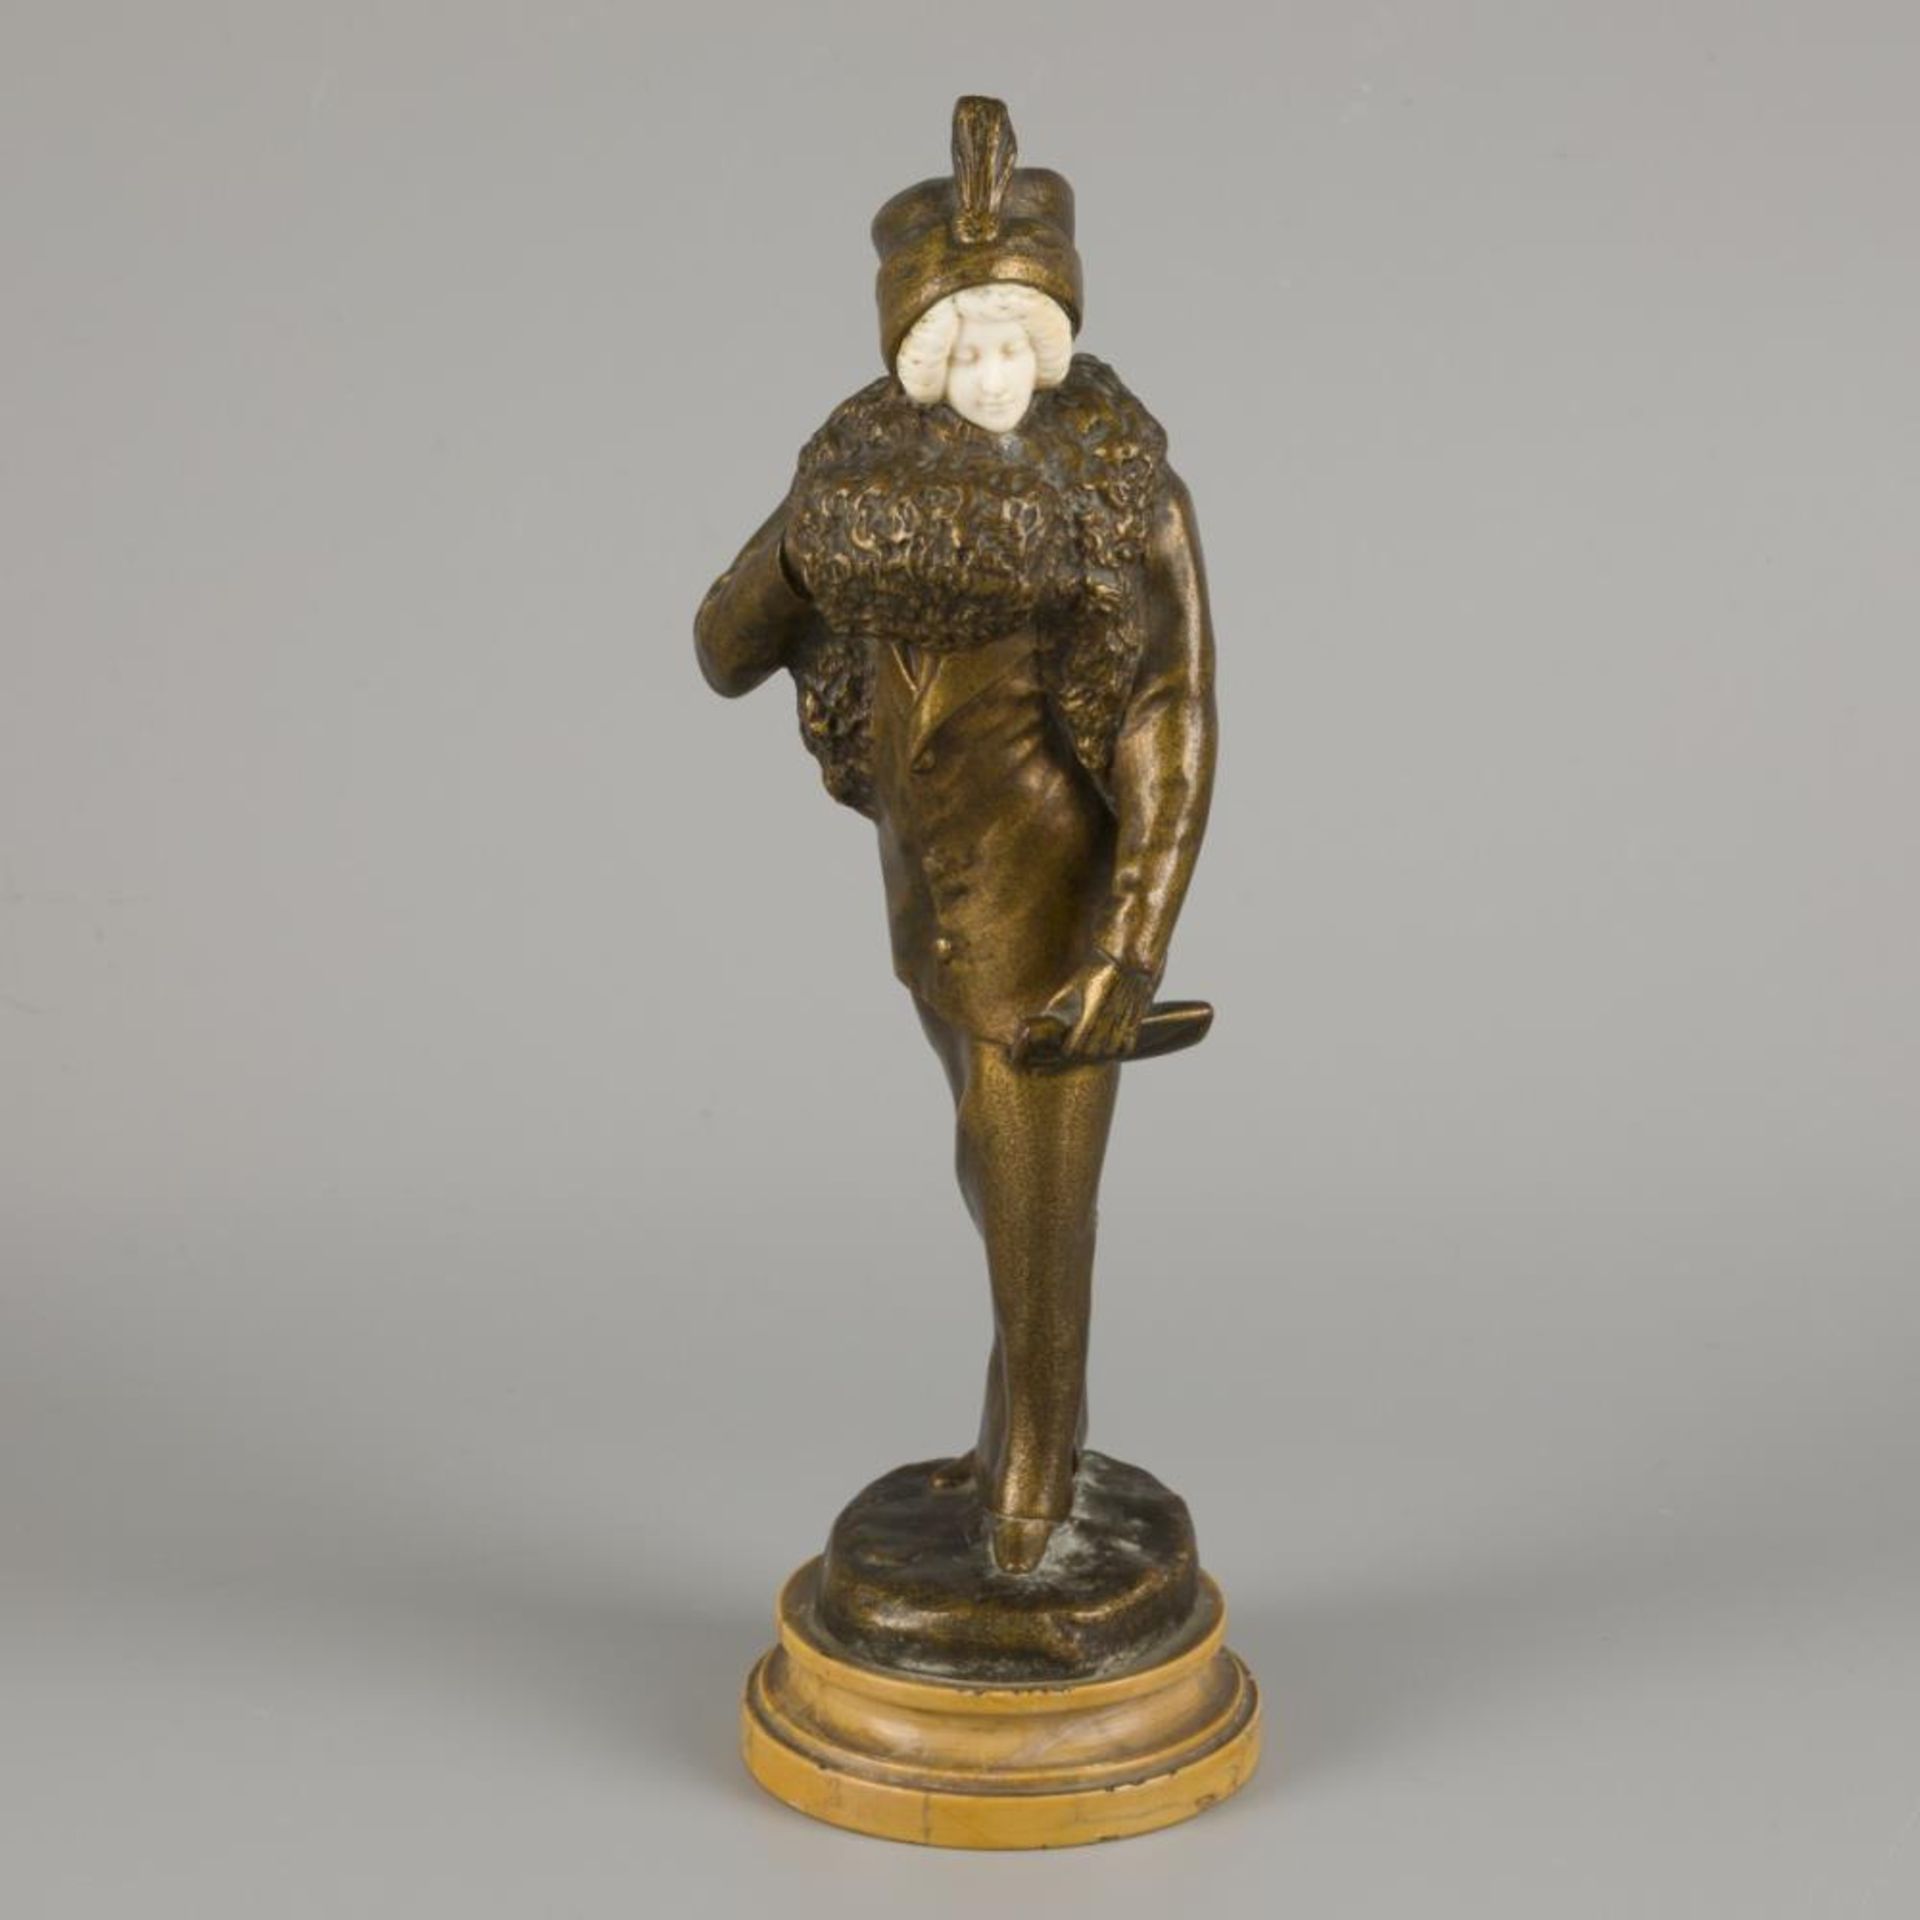 E. Thomasson (XIX-XX), A bronze sculpture of an elegant lady with a fur muff, Belgium, ca. 1900. - Image 2 of 6